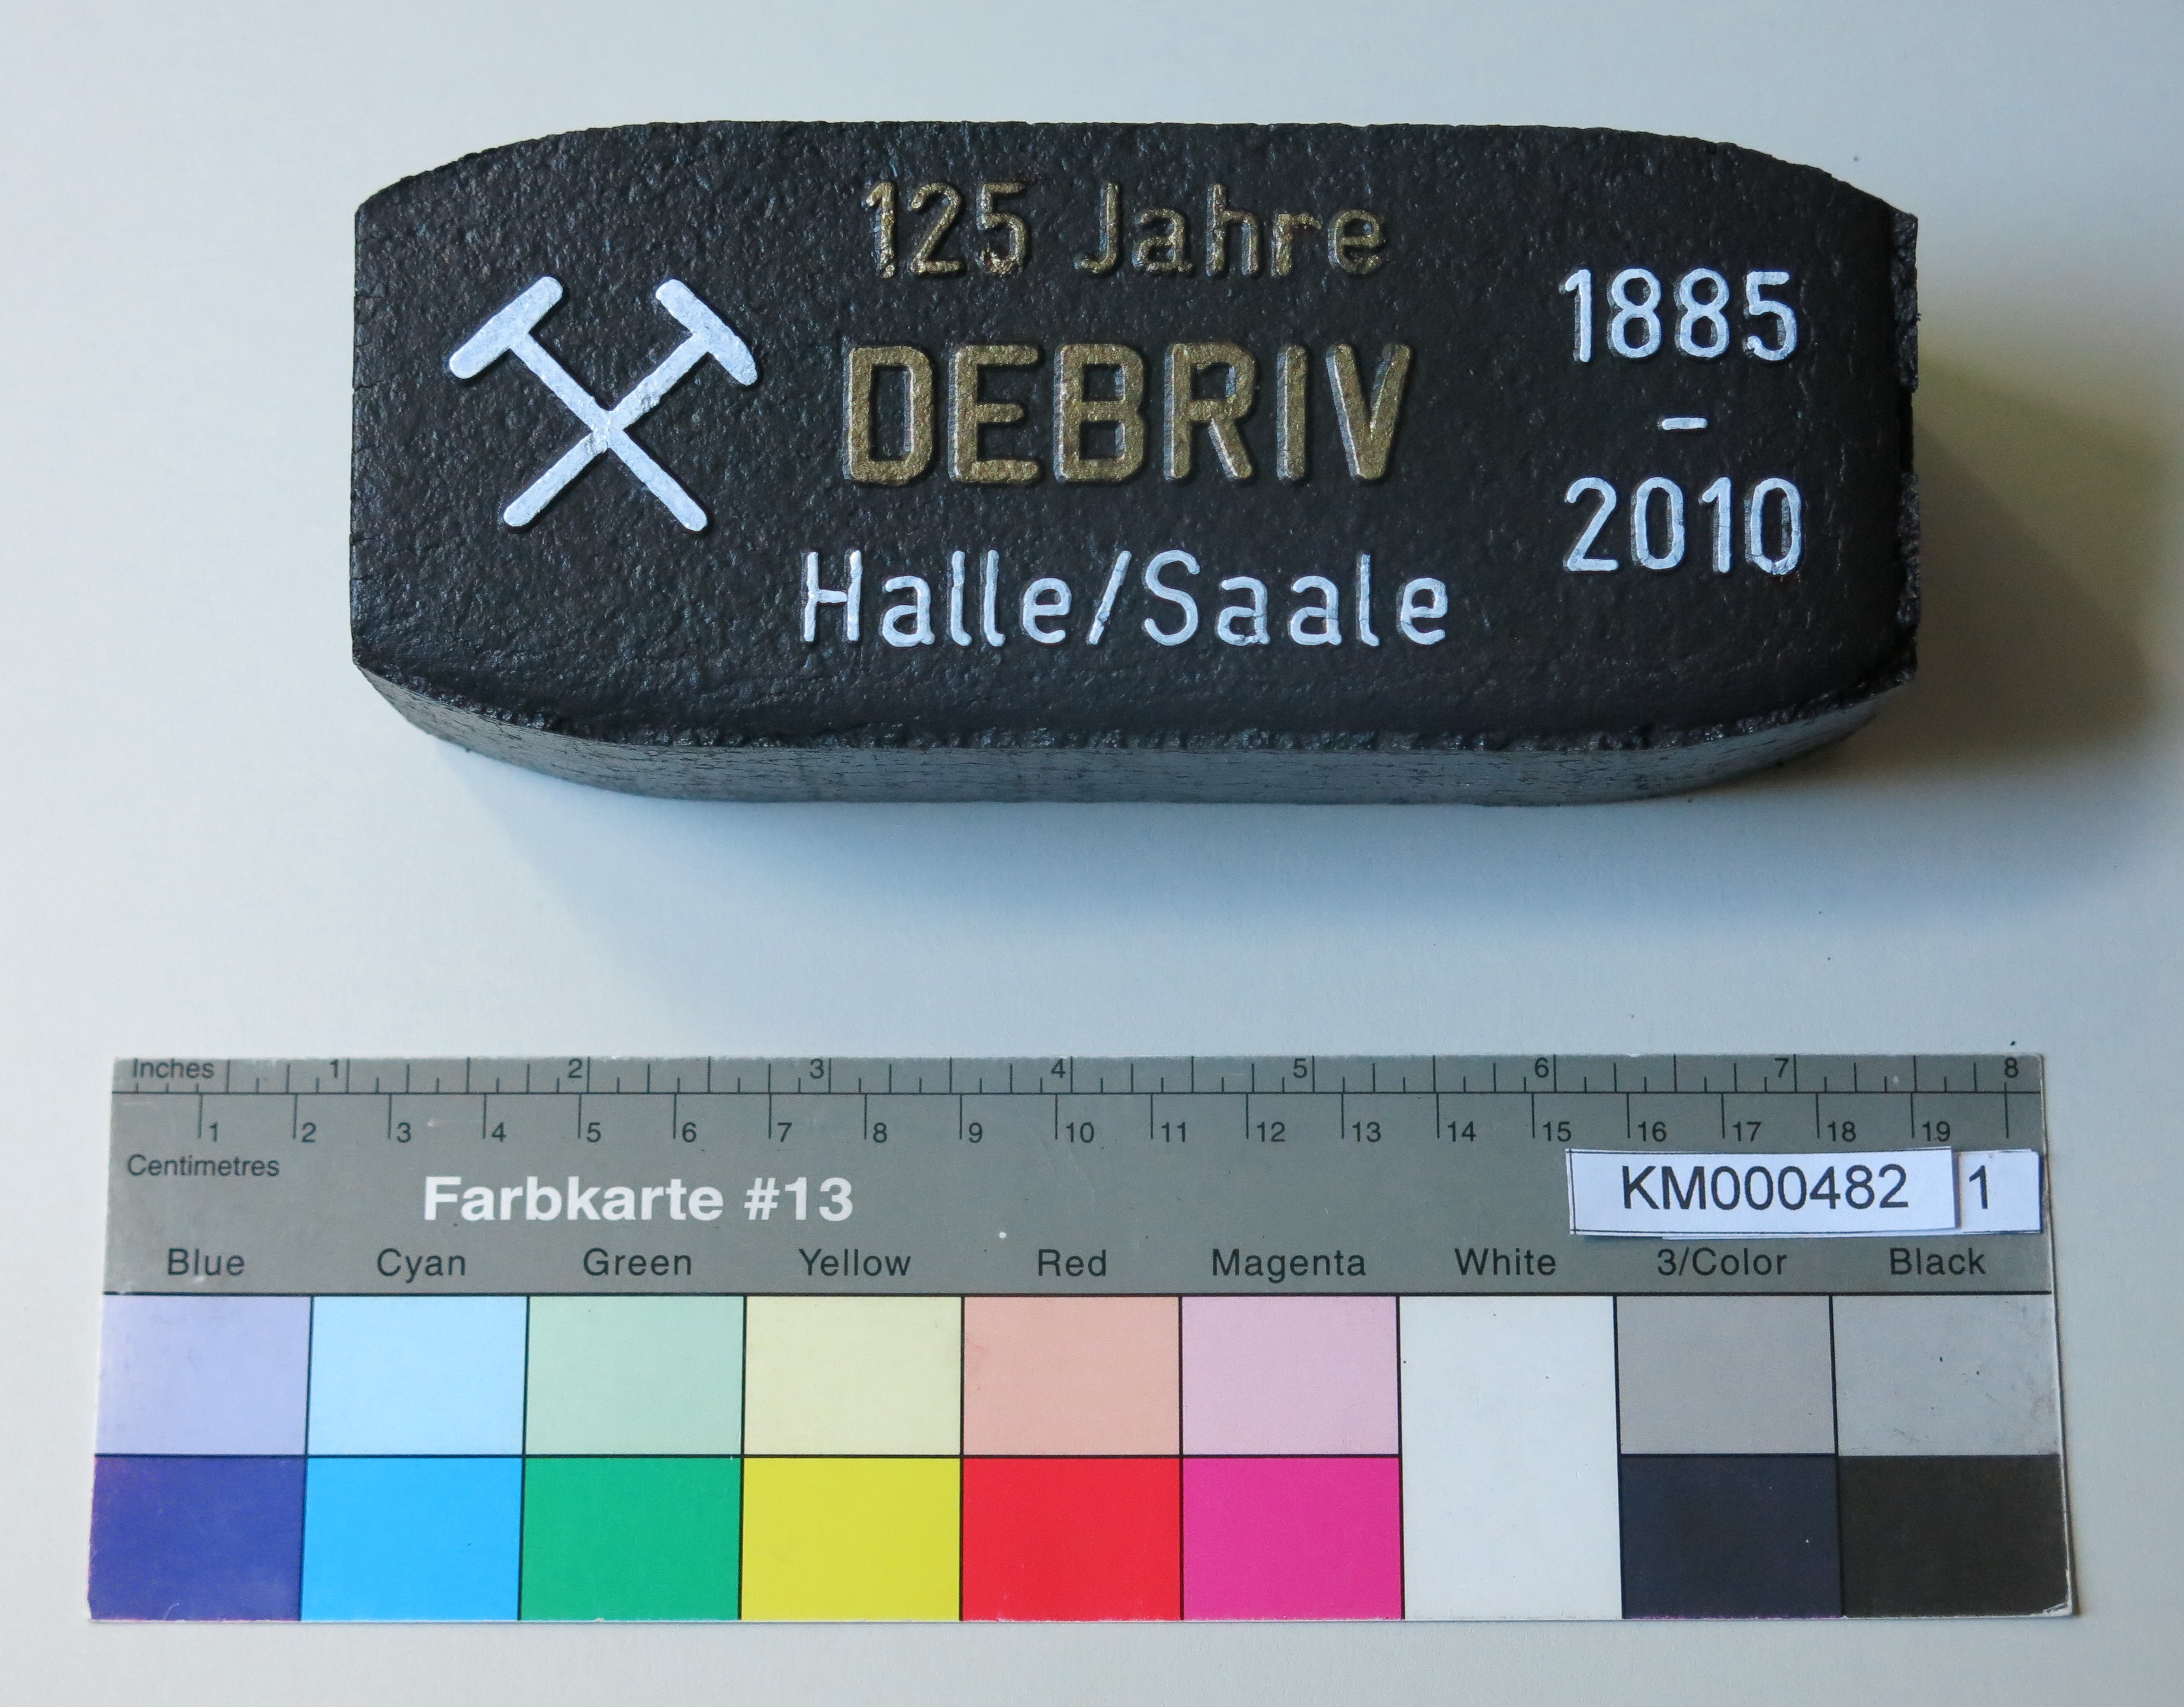 Zierbrikett "125 Jahre DEBRIV Halle/Saale 1885-2010" (Energiefabrik Knappenrode CC BY-SA)